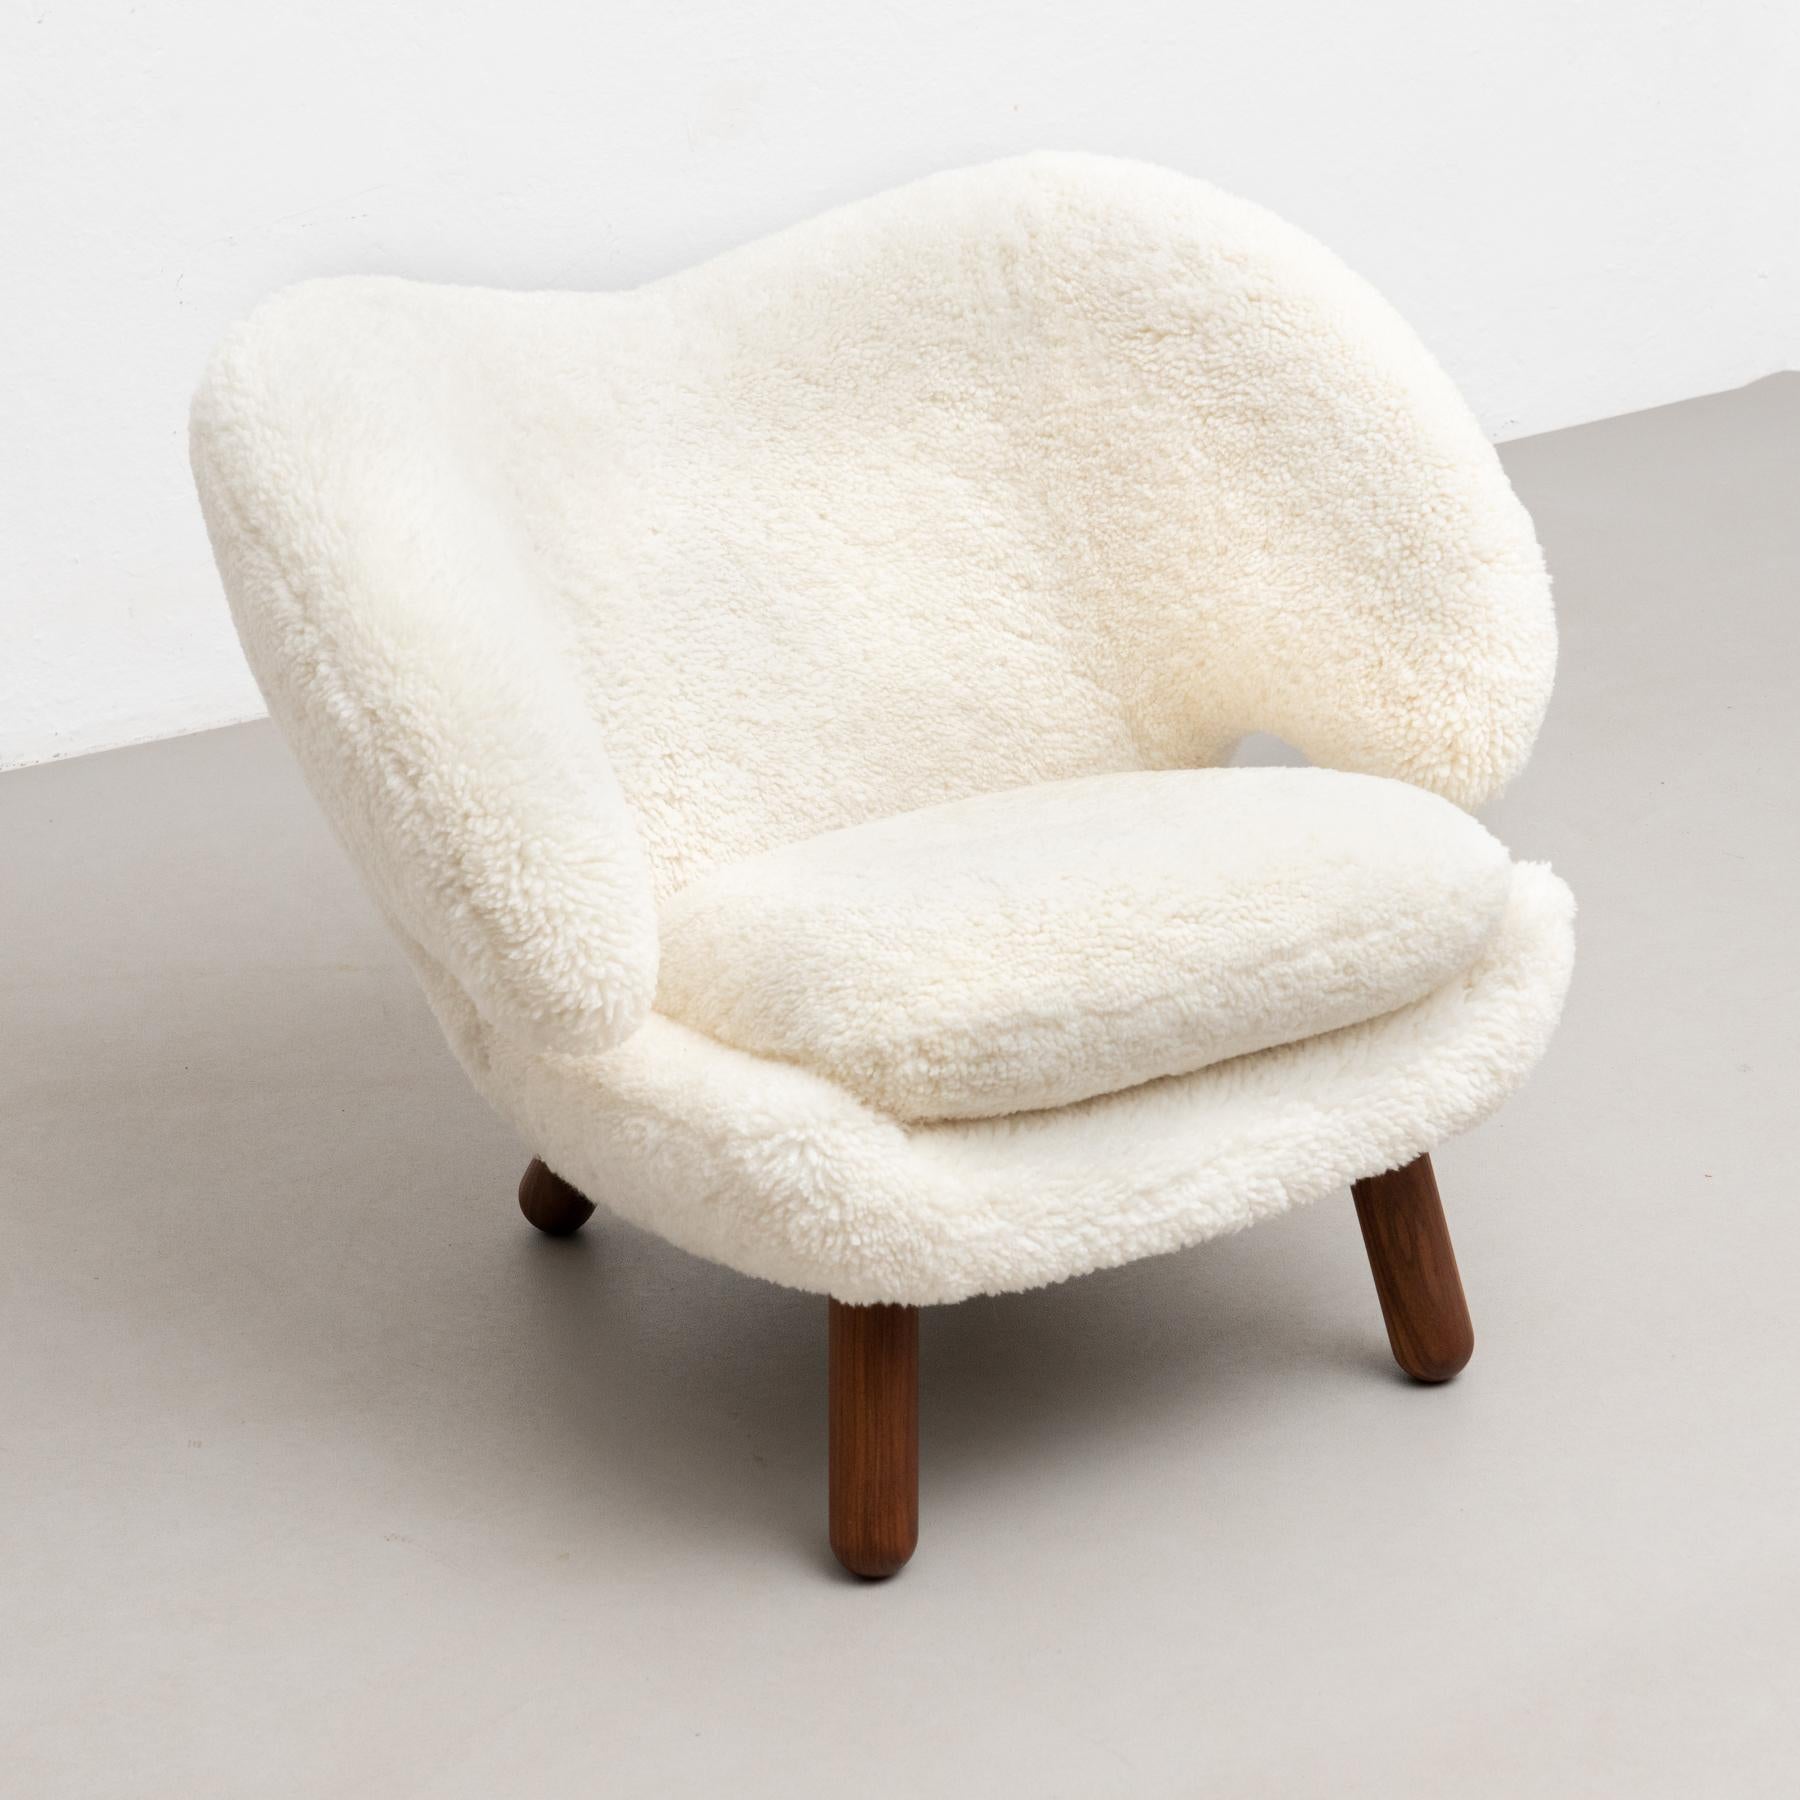 Finn Juhl Pelican Chair Upholstered in Offwhite Sheepskin (Chaise Pélican recouverte de peau de mouton blanc cassé) en vente 2